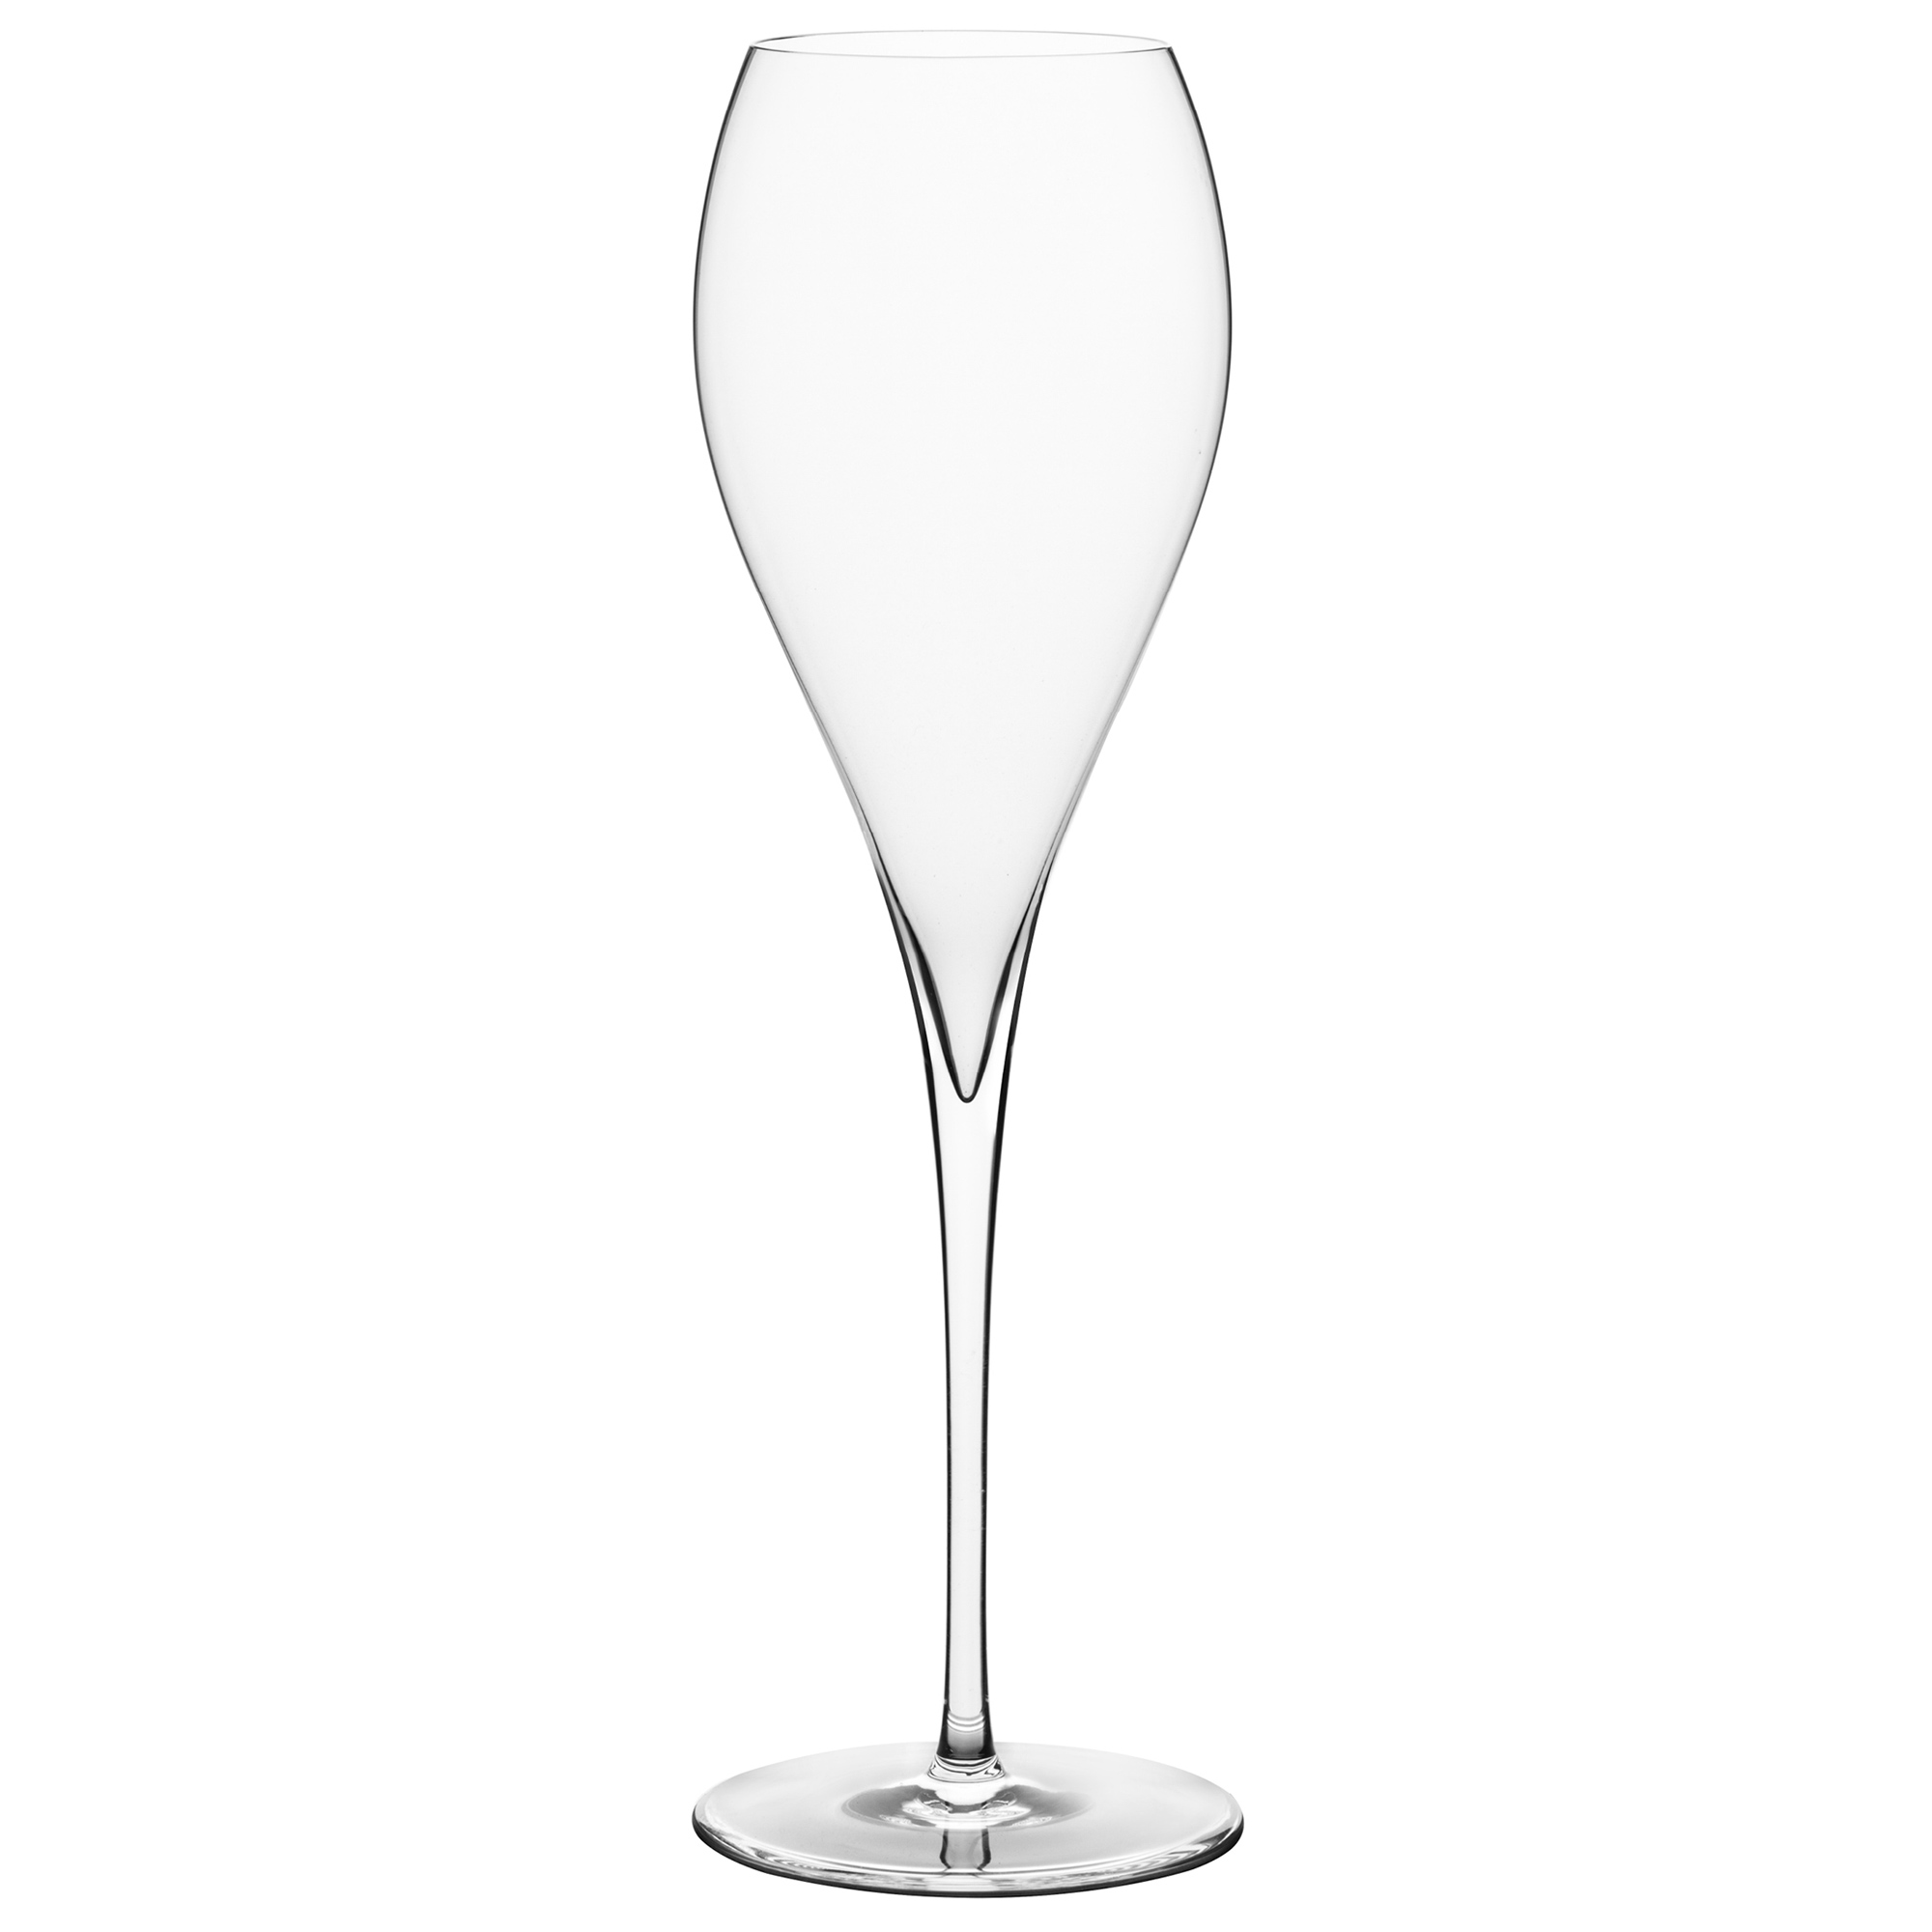 Elia Miravell Tulip Wine Glasses